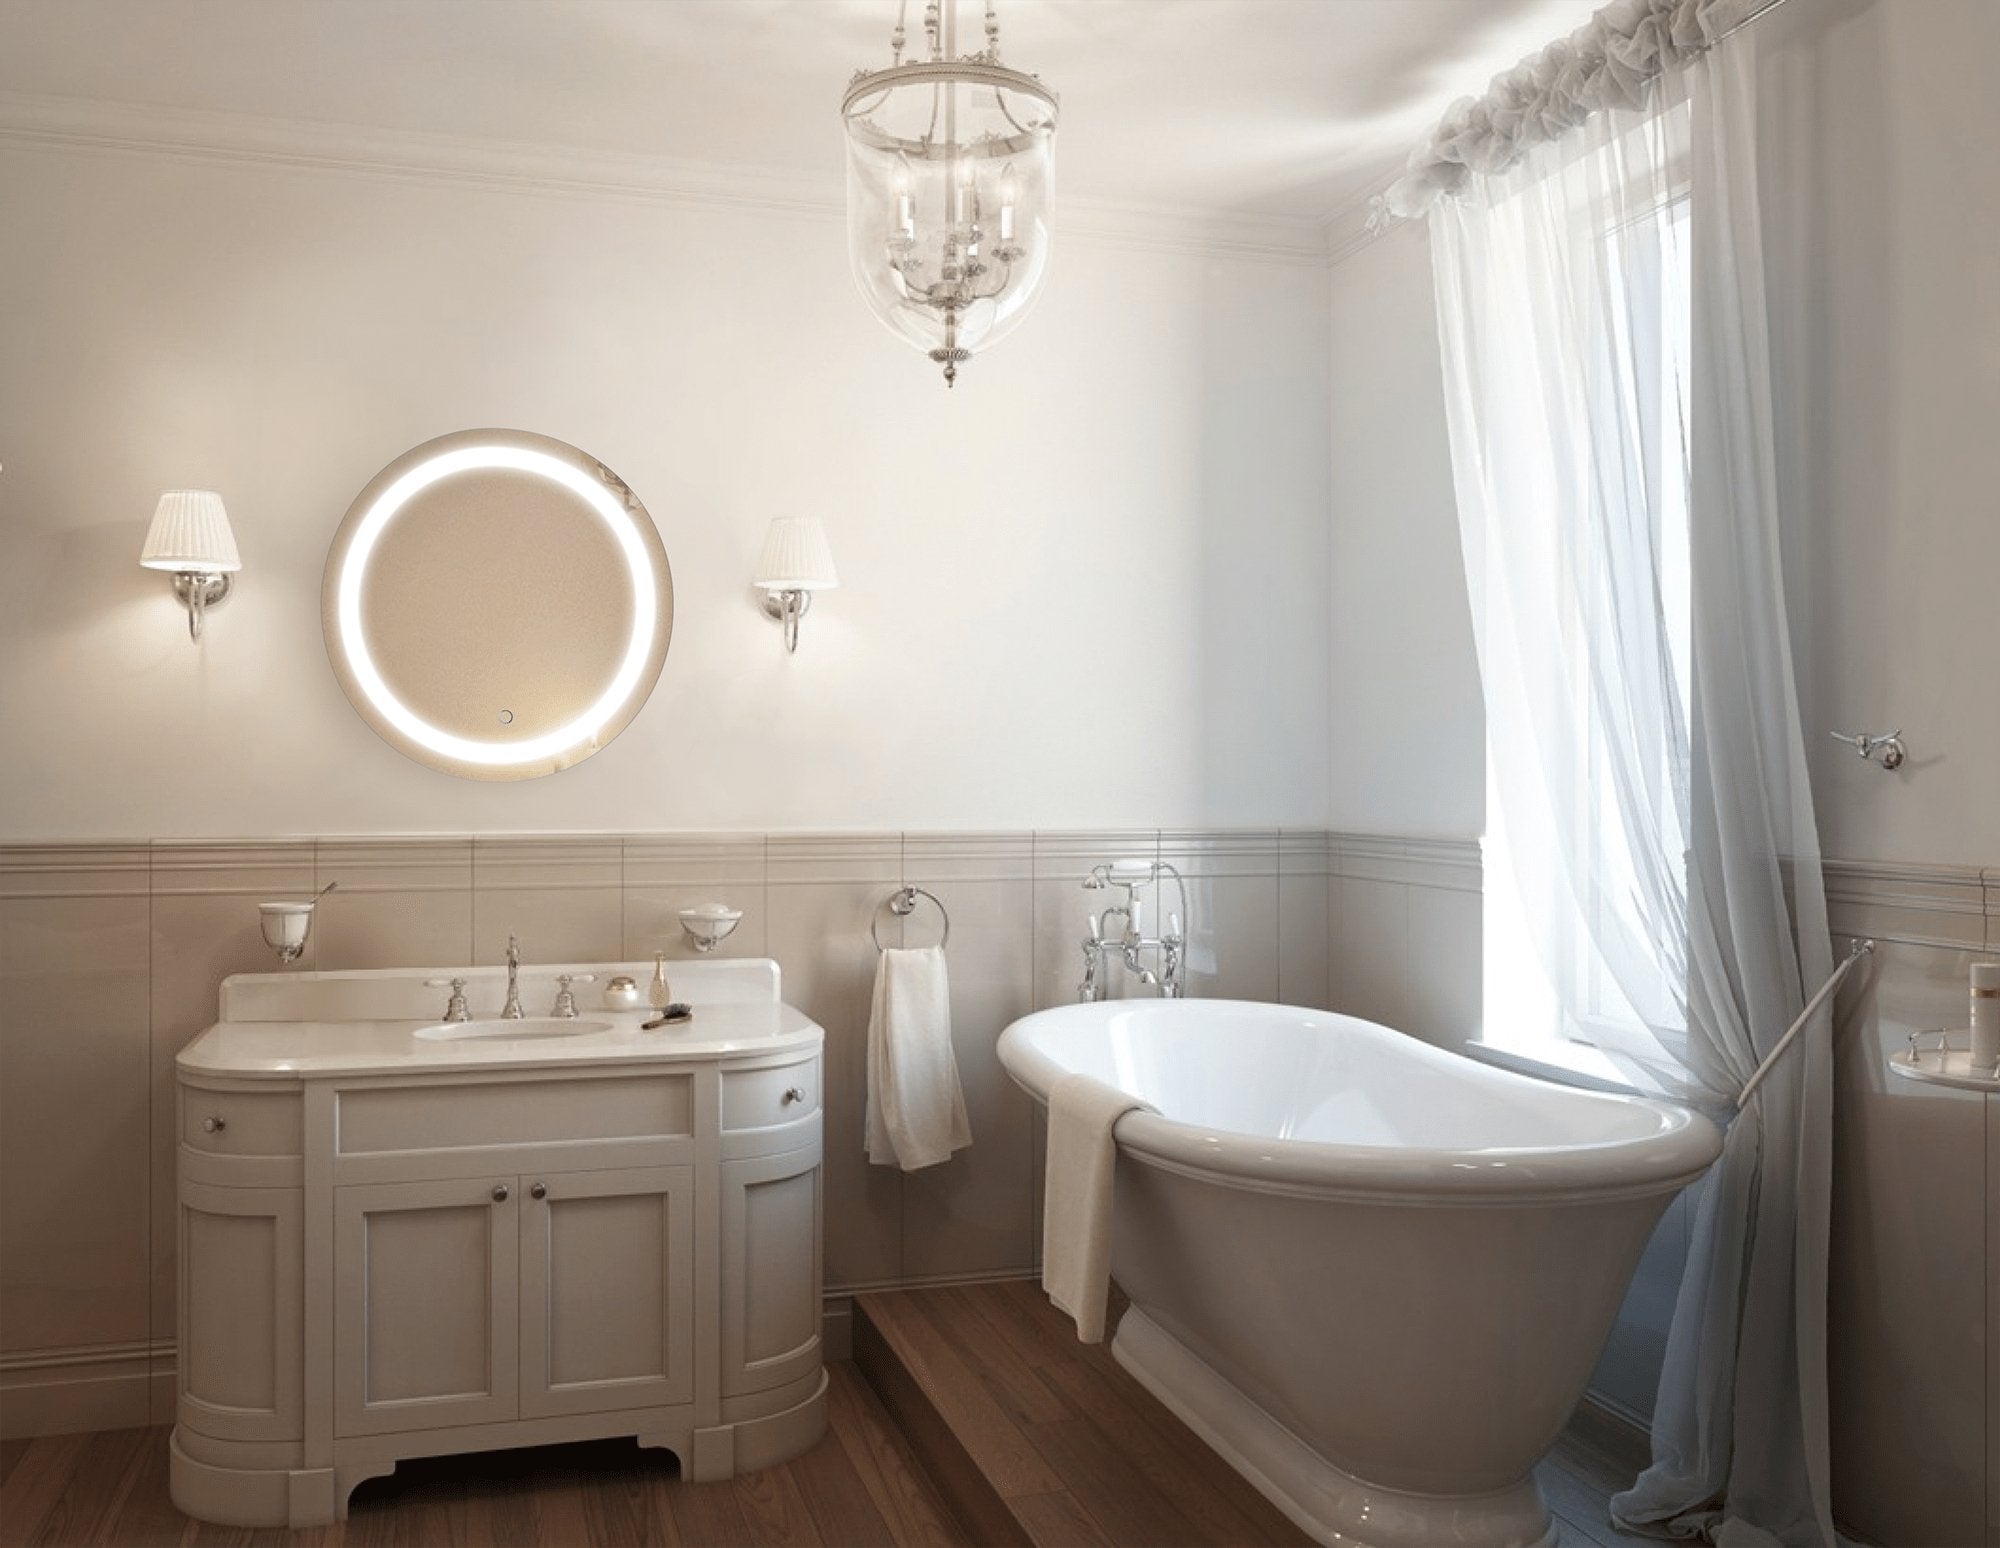 Icon Round 24" x 24" LED Bathroom Mirror w/ Dimmer & Defogger | Round Lighted Vanity Mirror - Molaix - Molaix853962007286Lighted Wall Mirror,RoundICON2424R